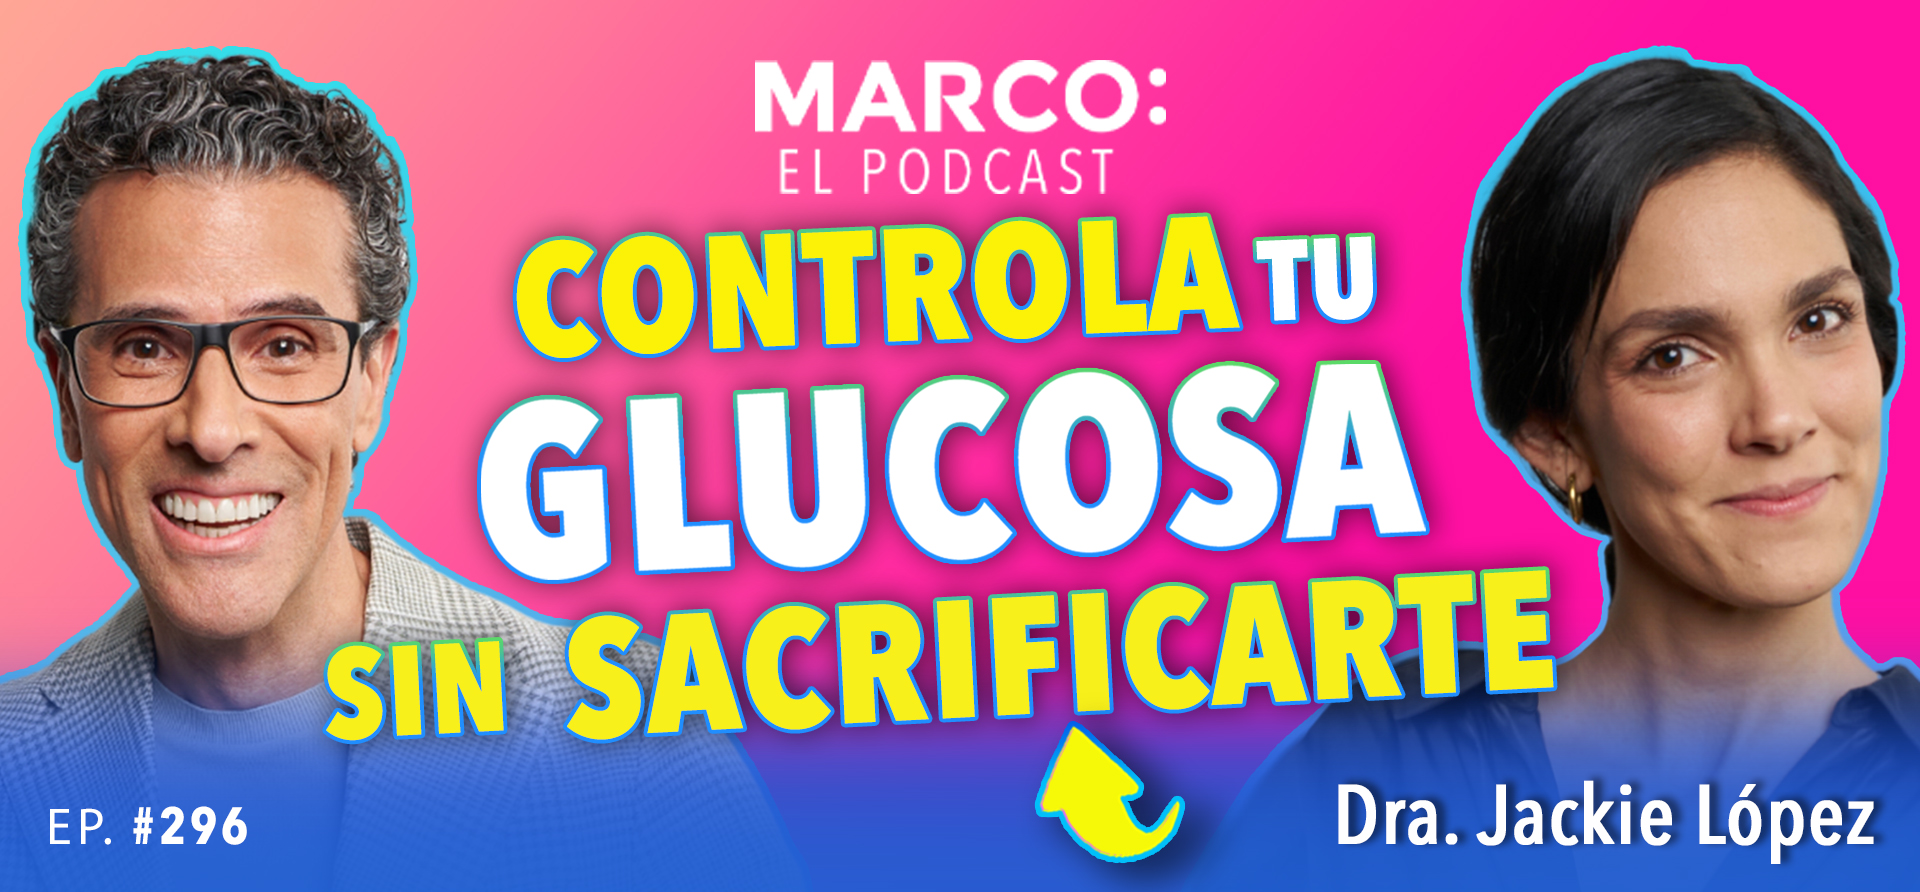 Controla tu glucosa banner Marco El Podcast